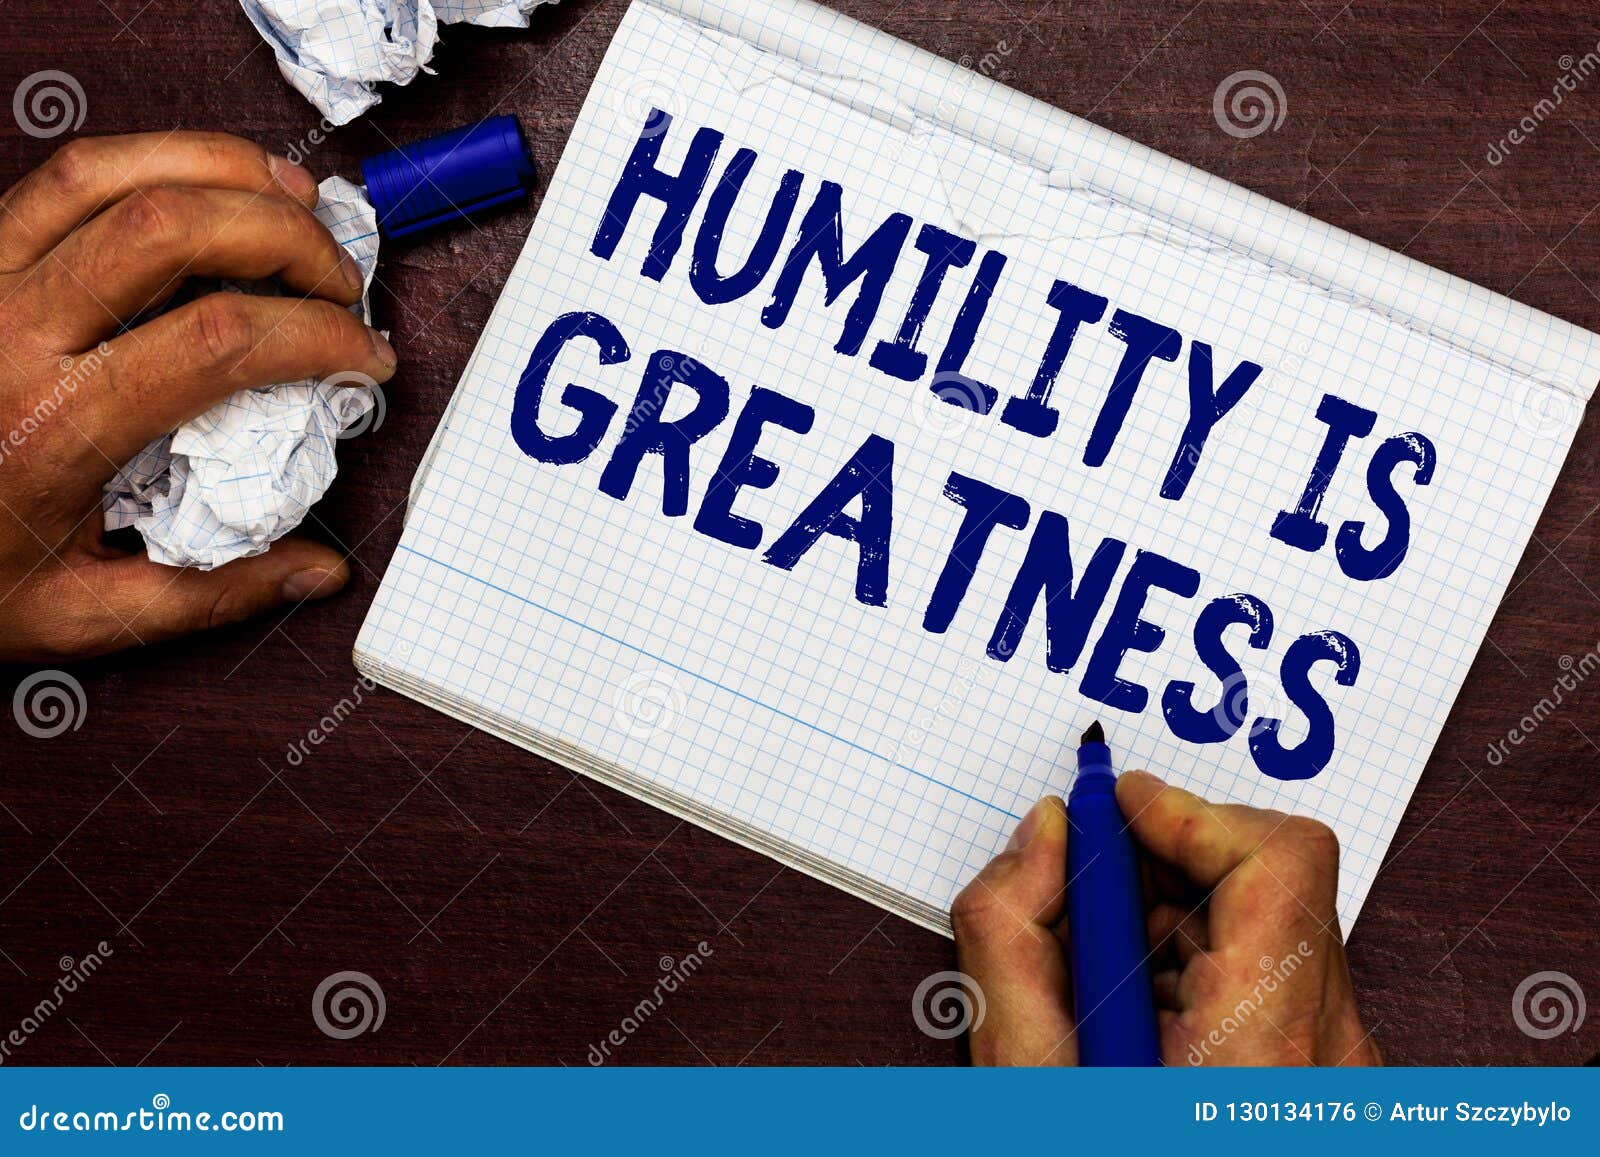 essay on humility